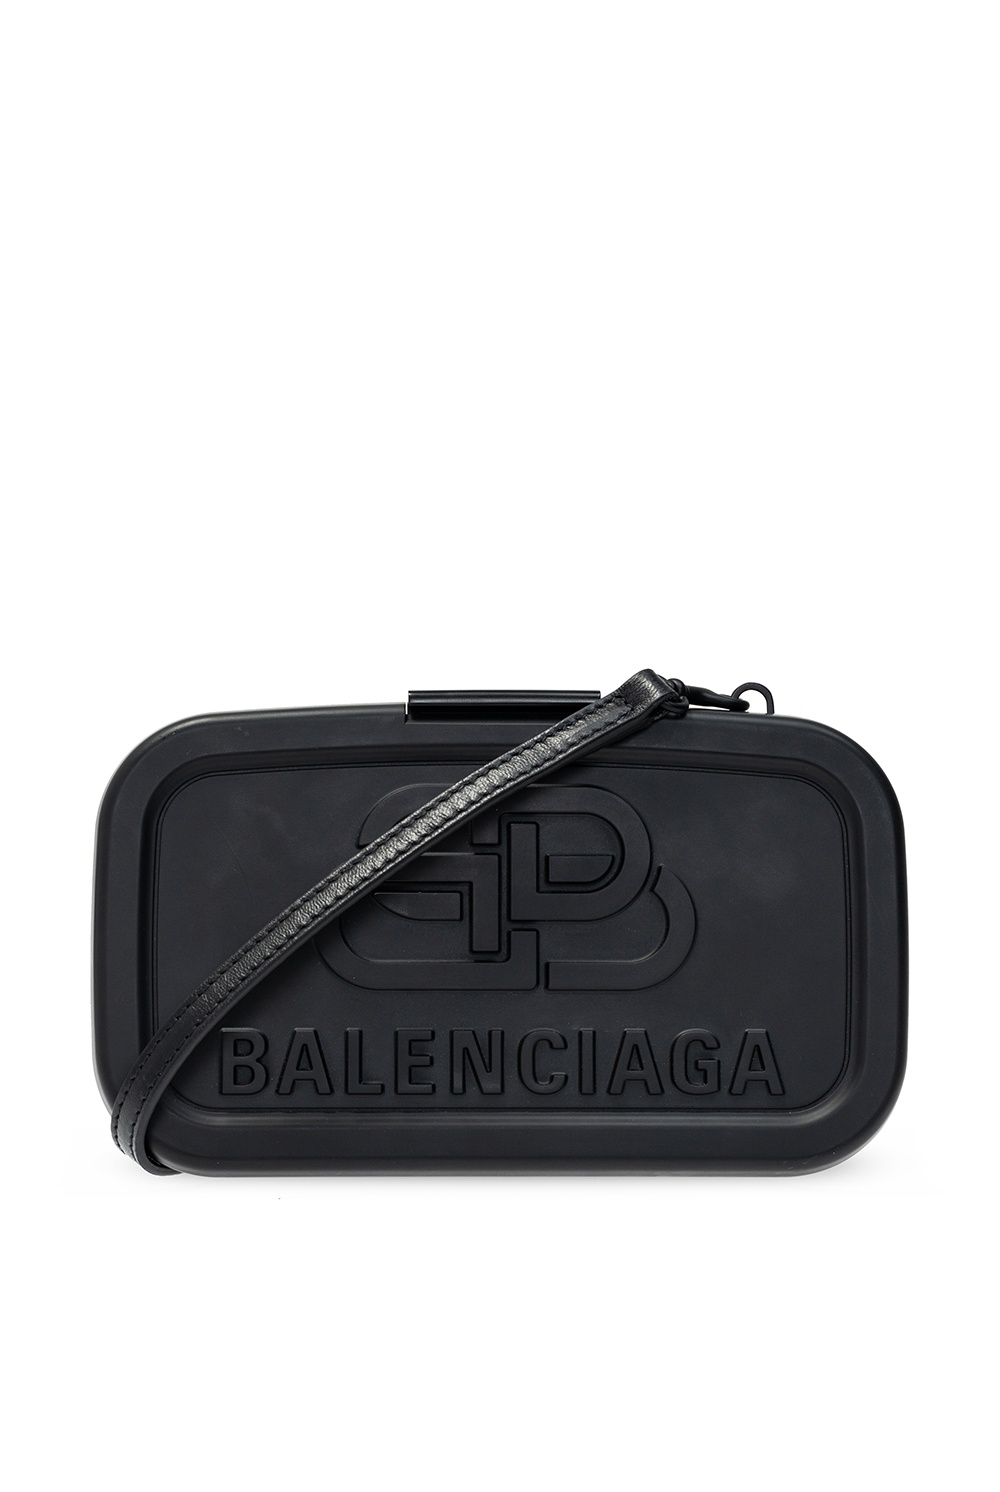 Balenciaga Logo Lunch Box Bag Plastic Red